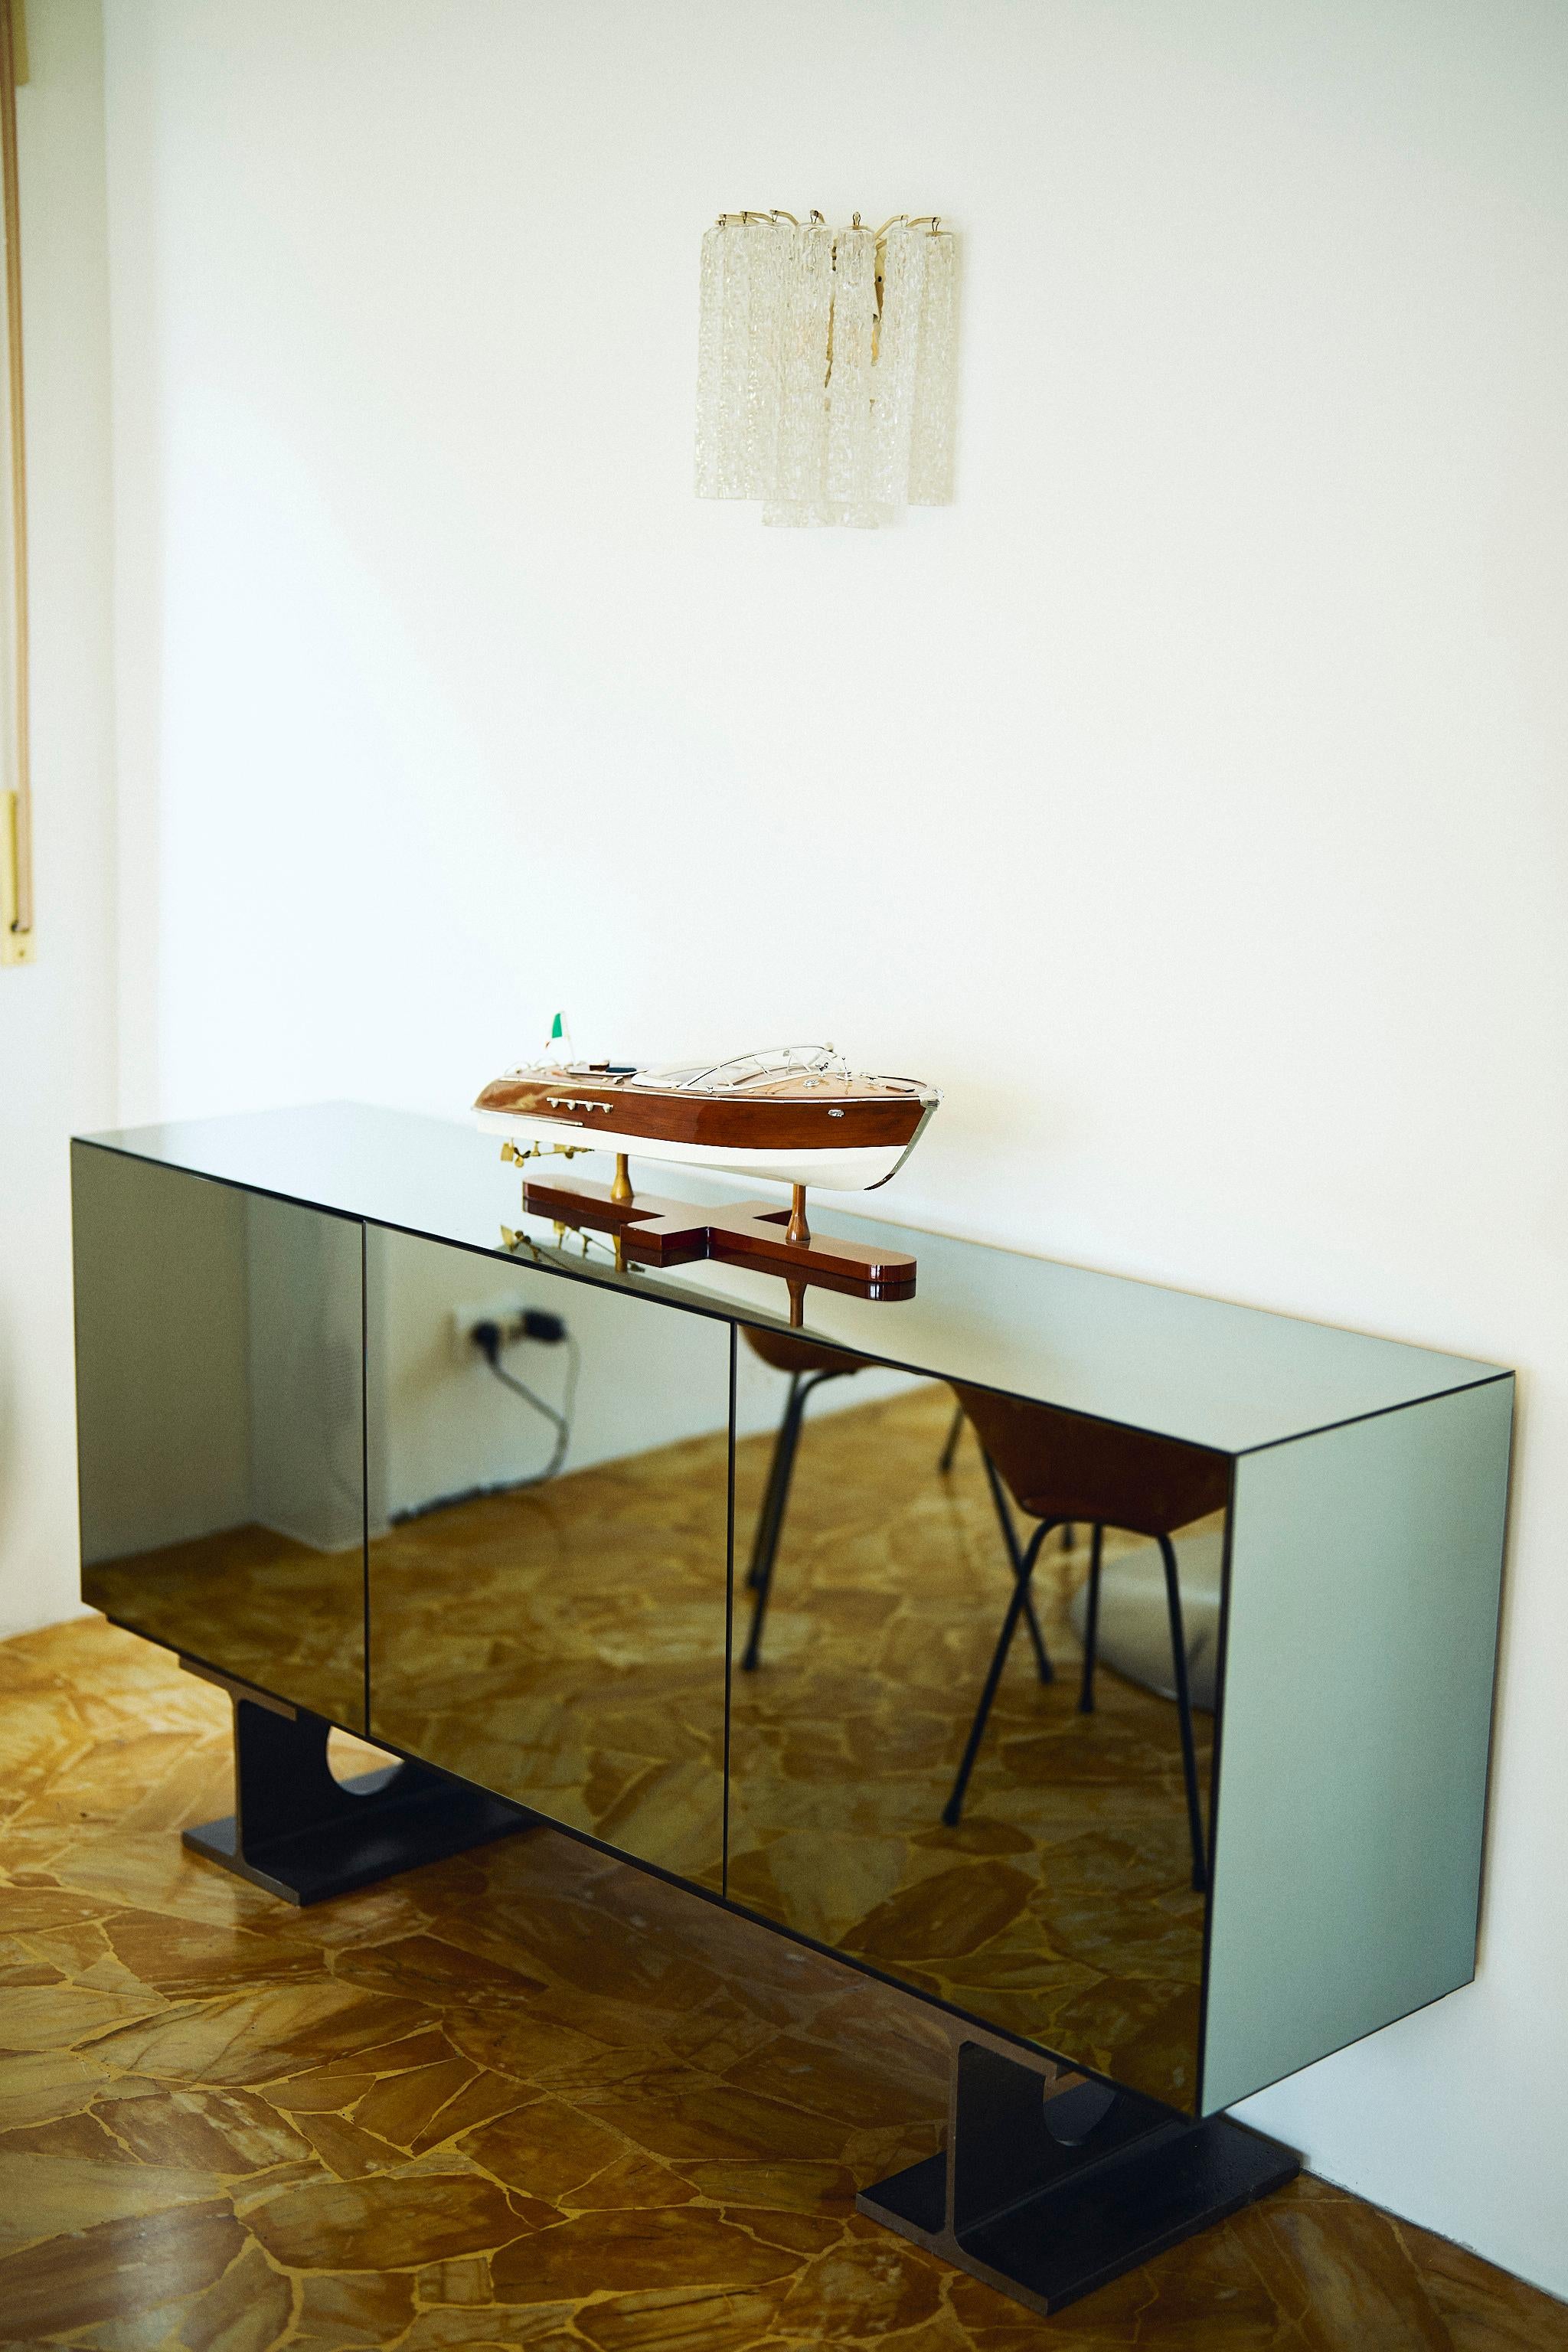 Steel Sculptural Brutalist Mirror Cabinet, Spinzi Milan, Industrial Collectible Design For Sale